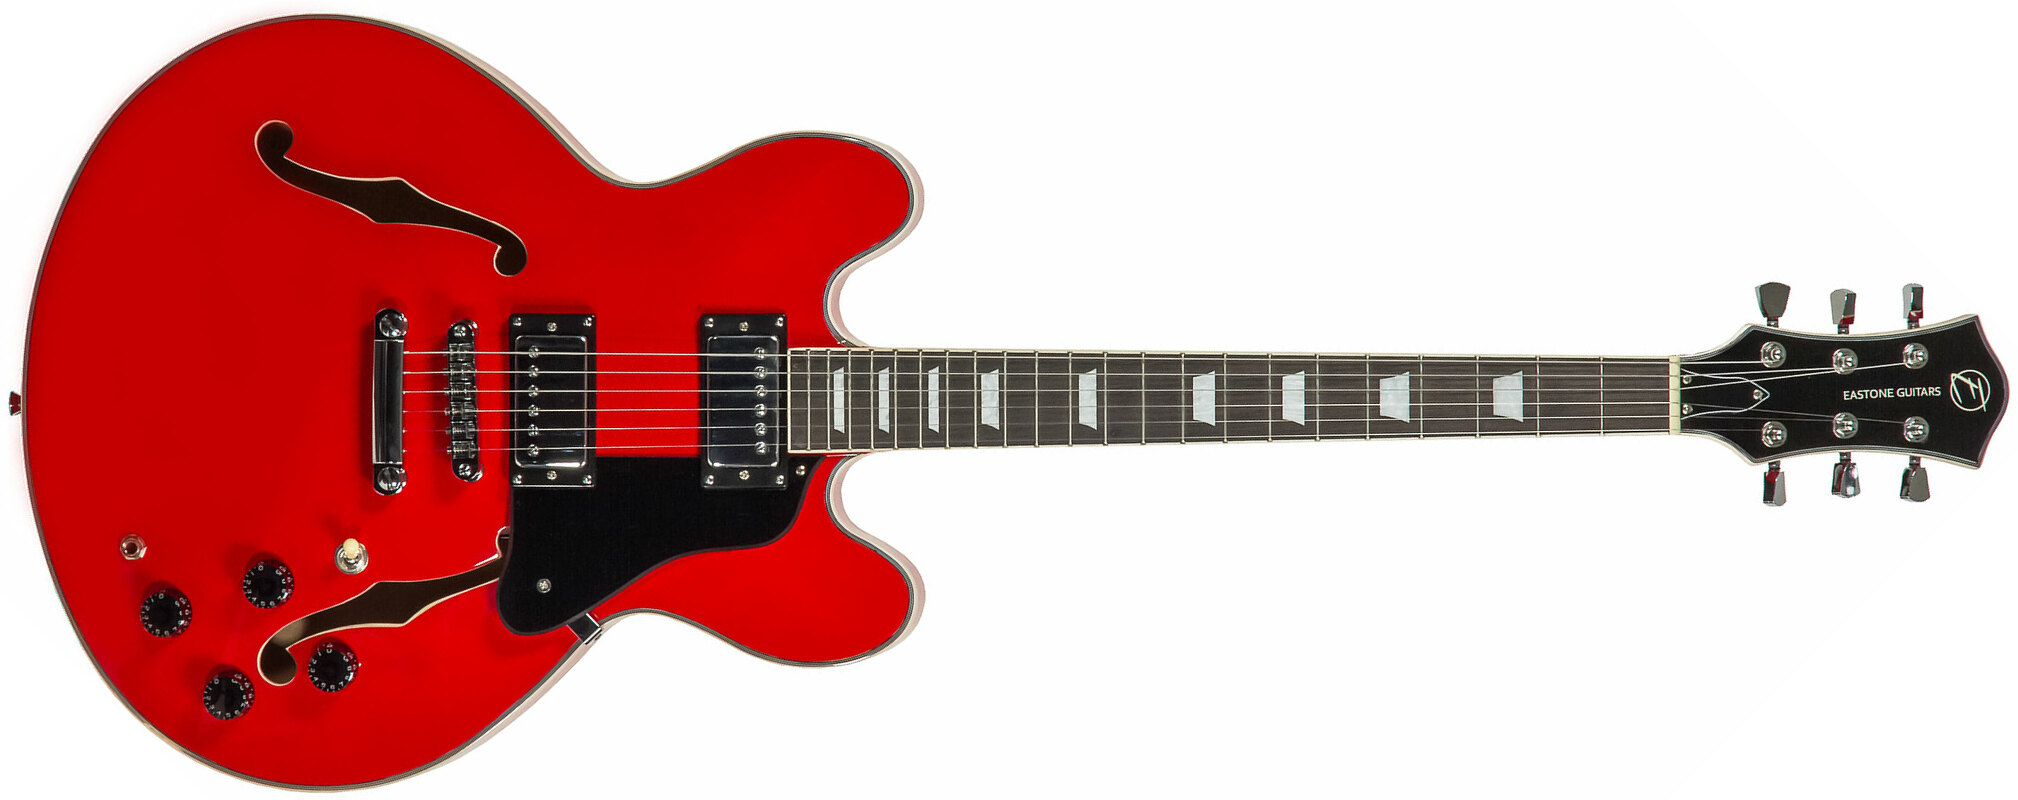 Eastone Gj70 Hh Ht Pur - Red - Semi hollow elektriche gitaar - Main picture